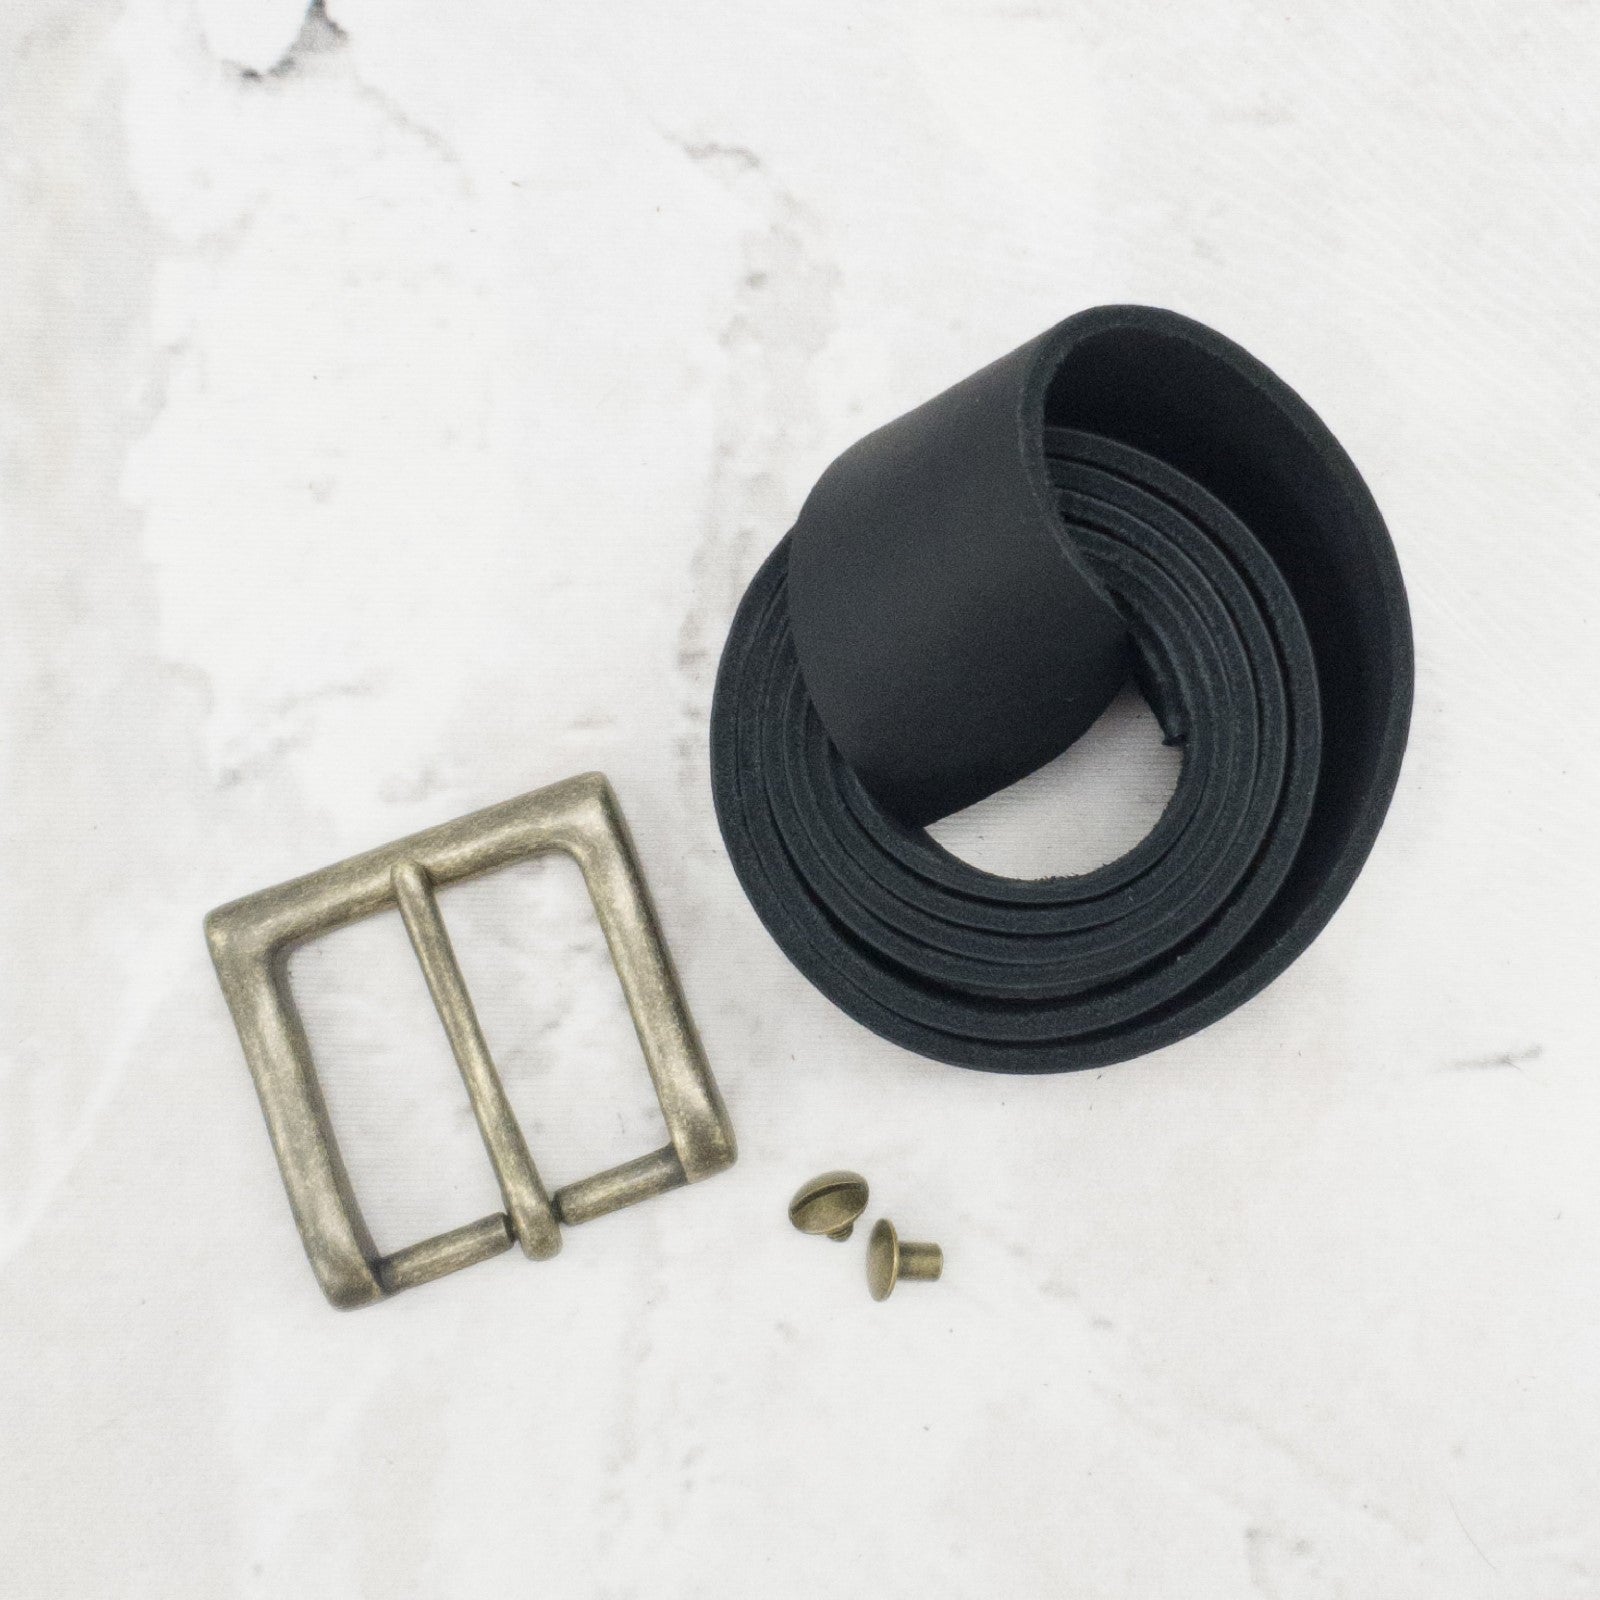 Belt Maker Kit, 8-9 oz, Black / Antique Brass / Without | The Leather Guy